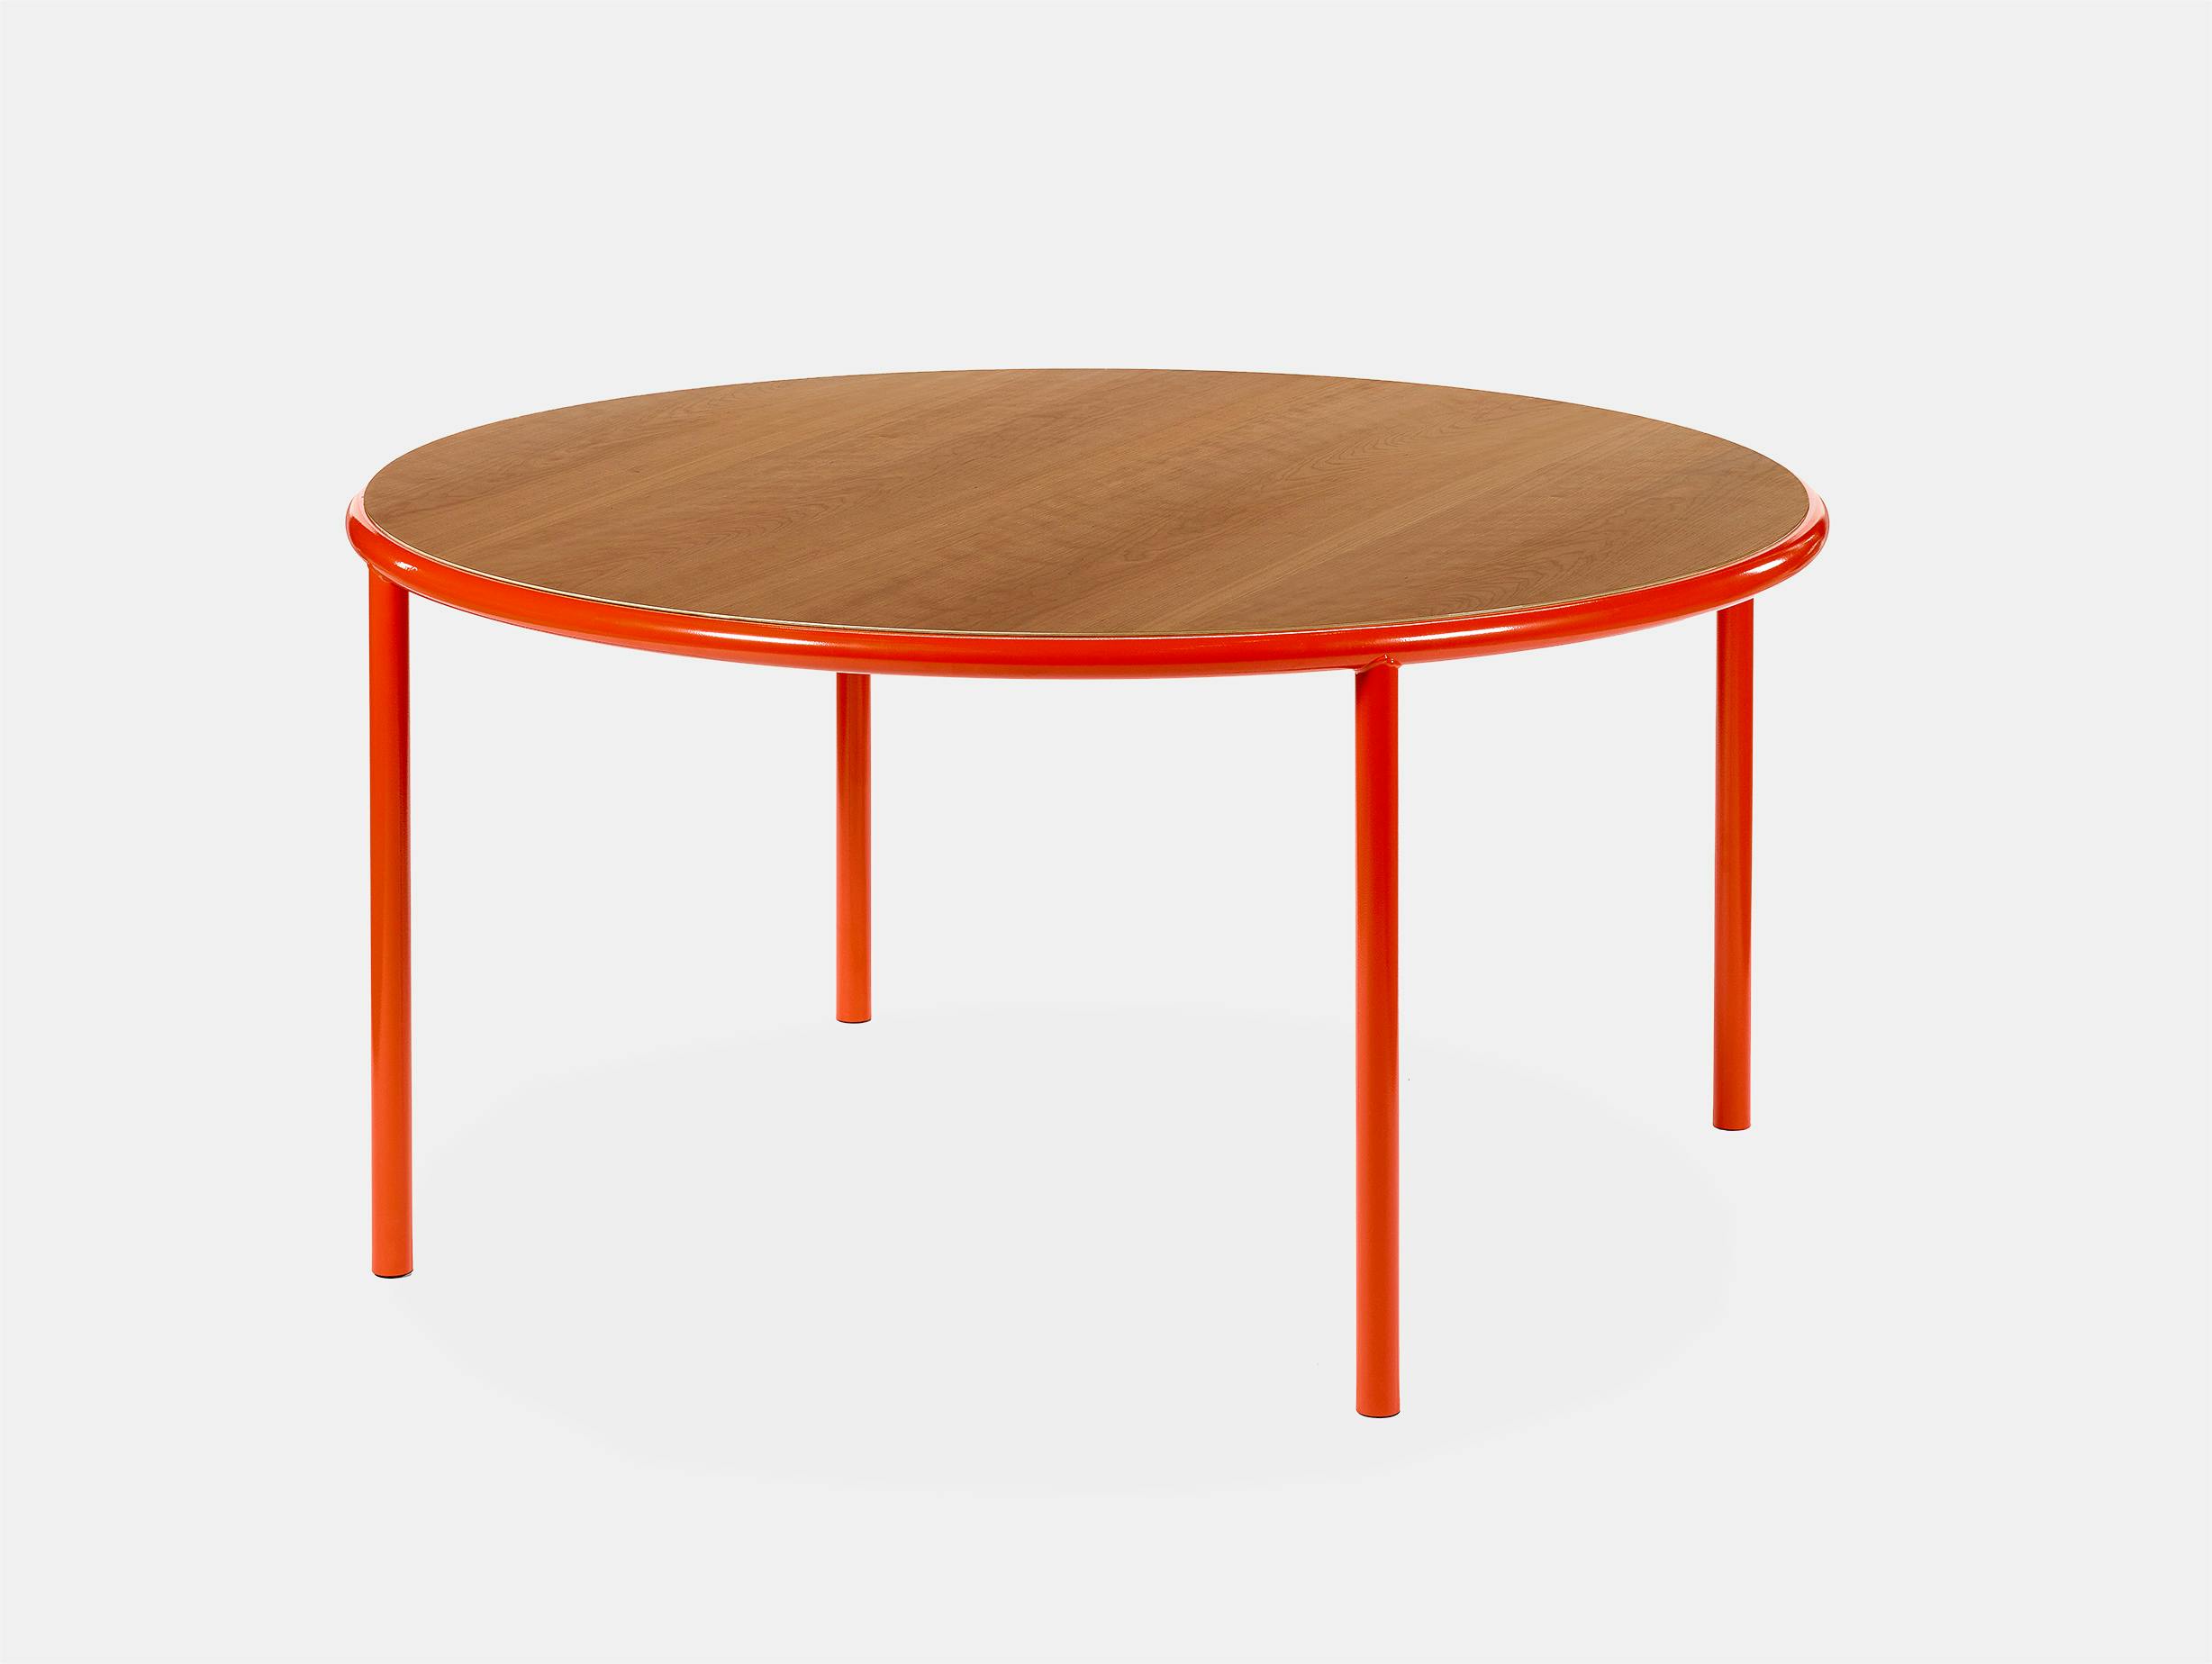 Muller van severen wooden table large round red cherry